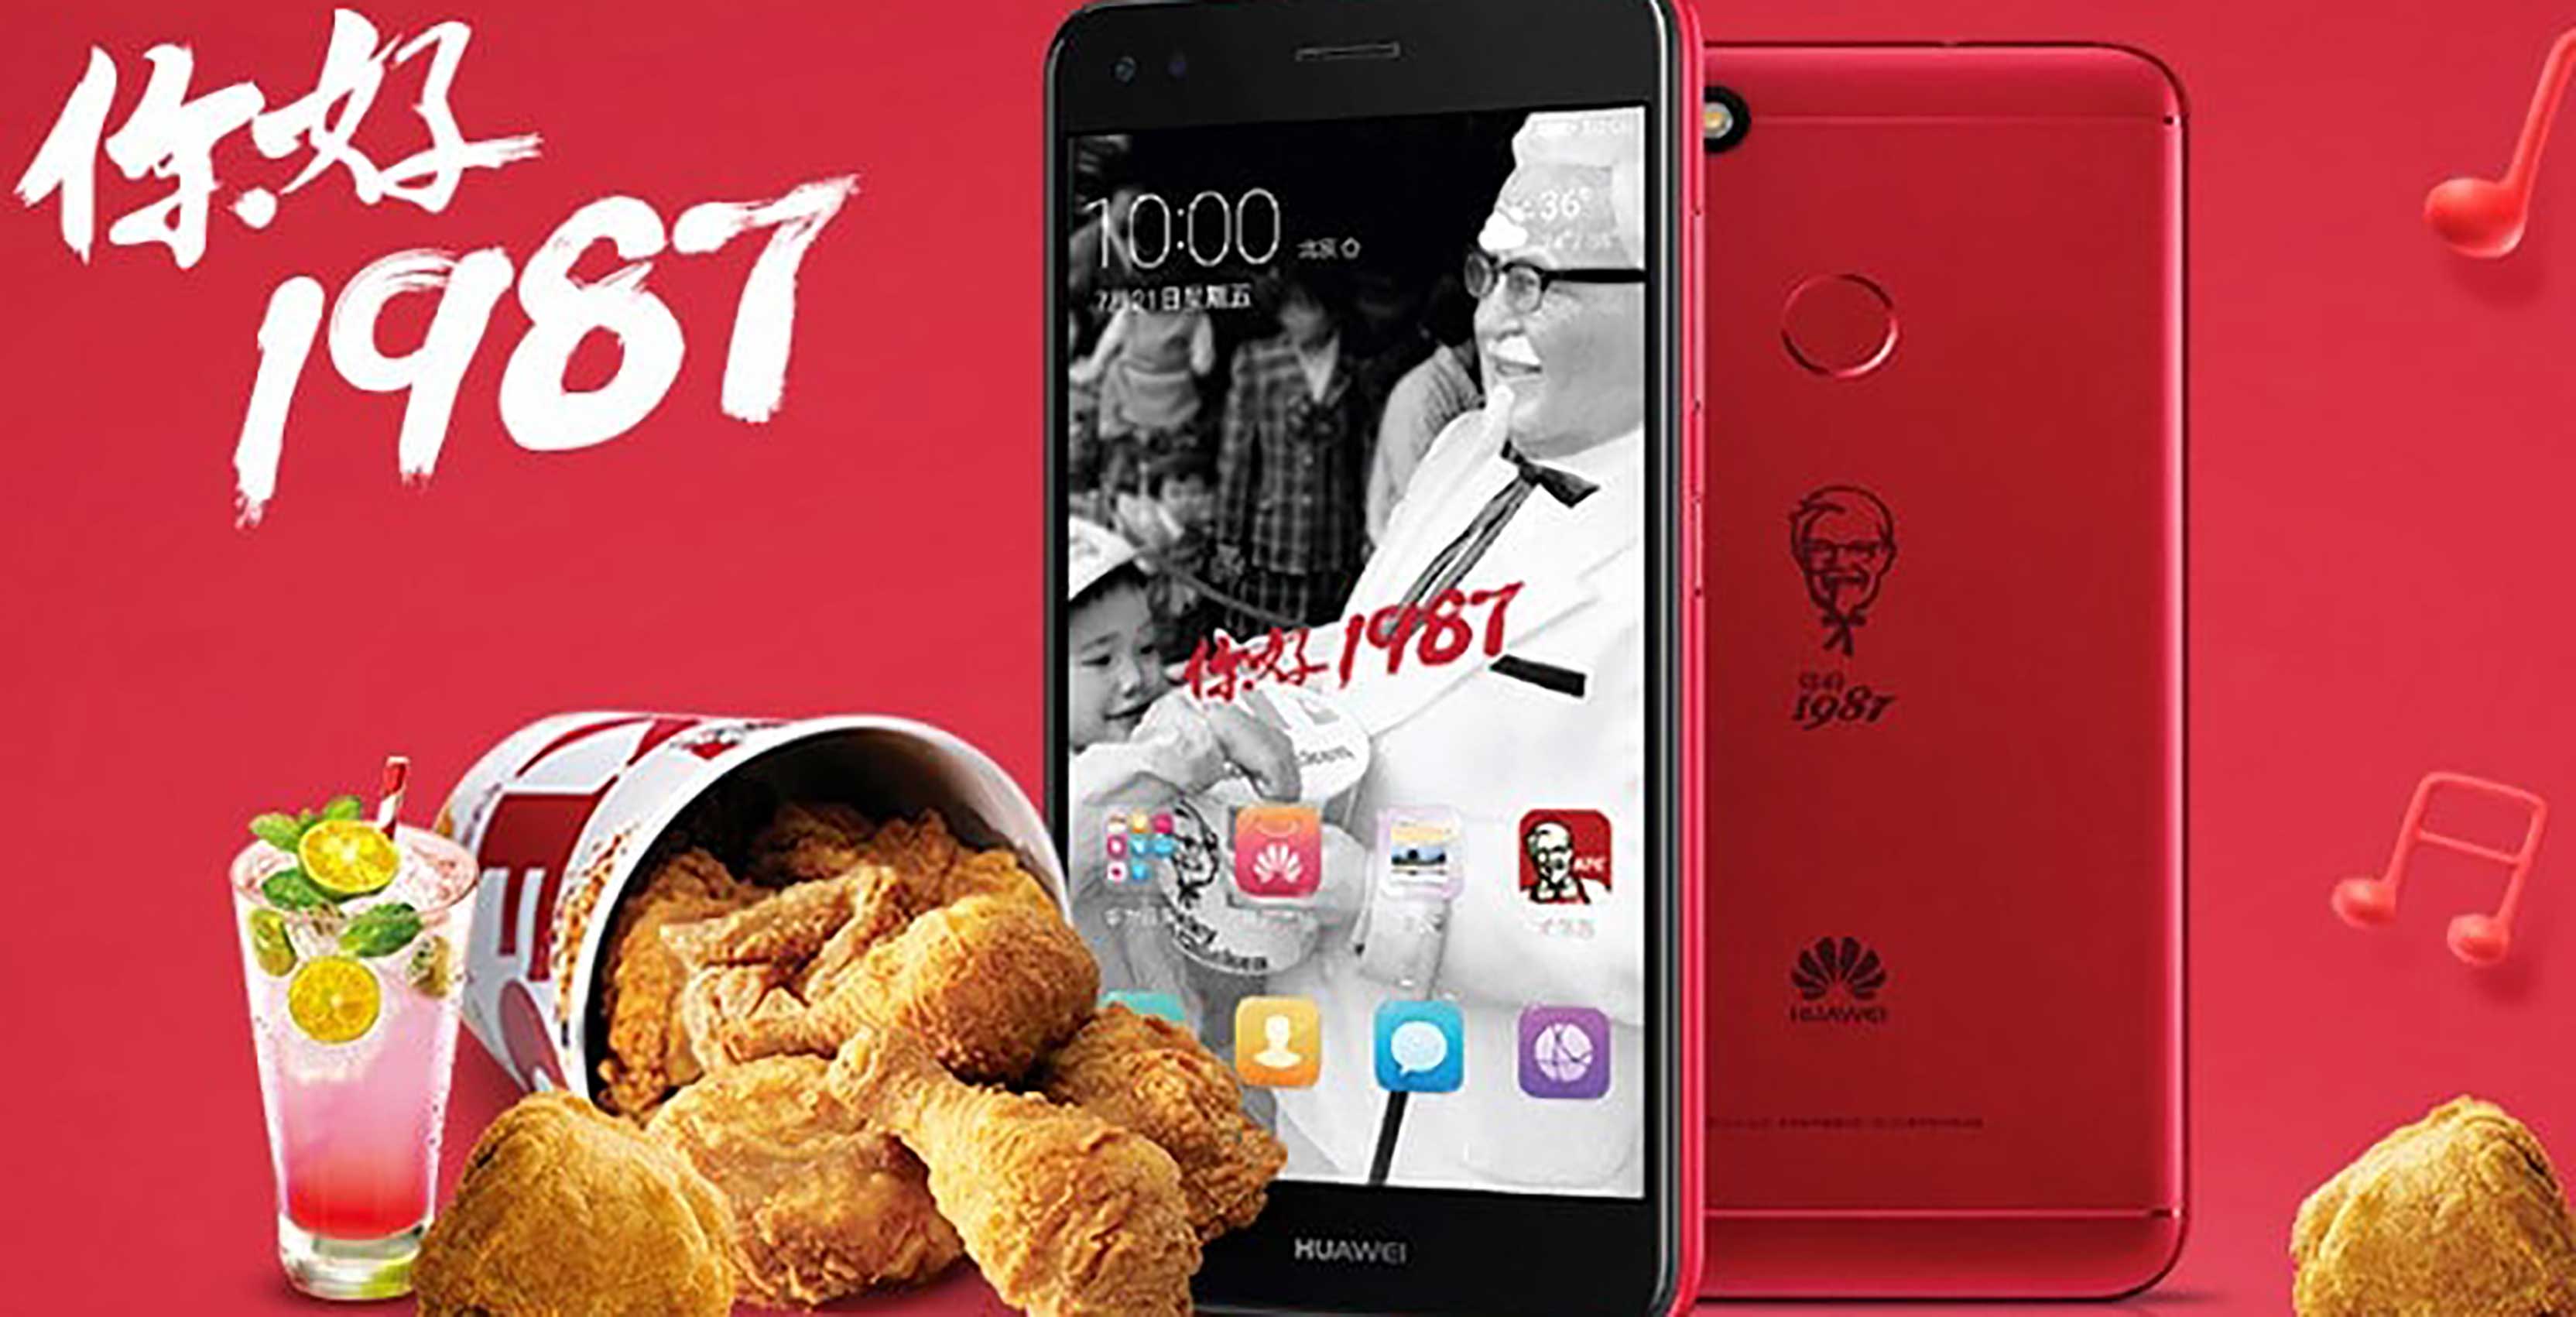 Huawei KFC smartphone